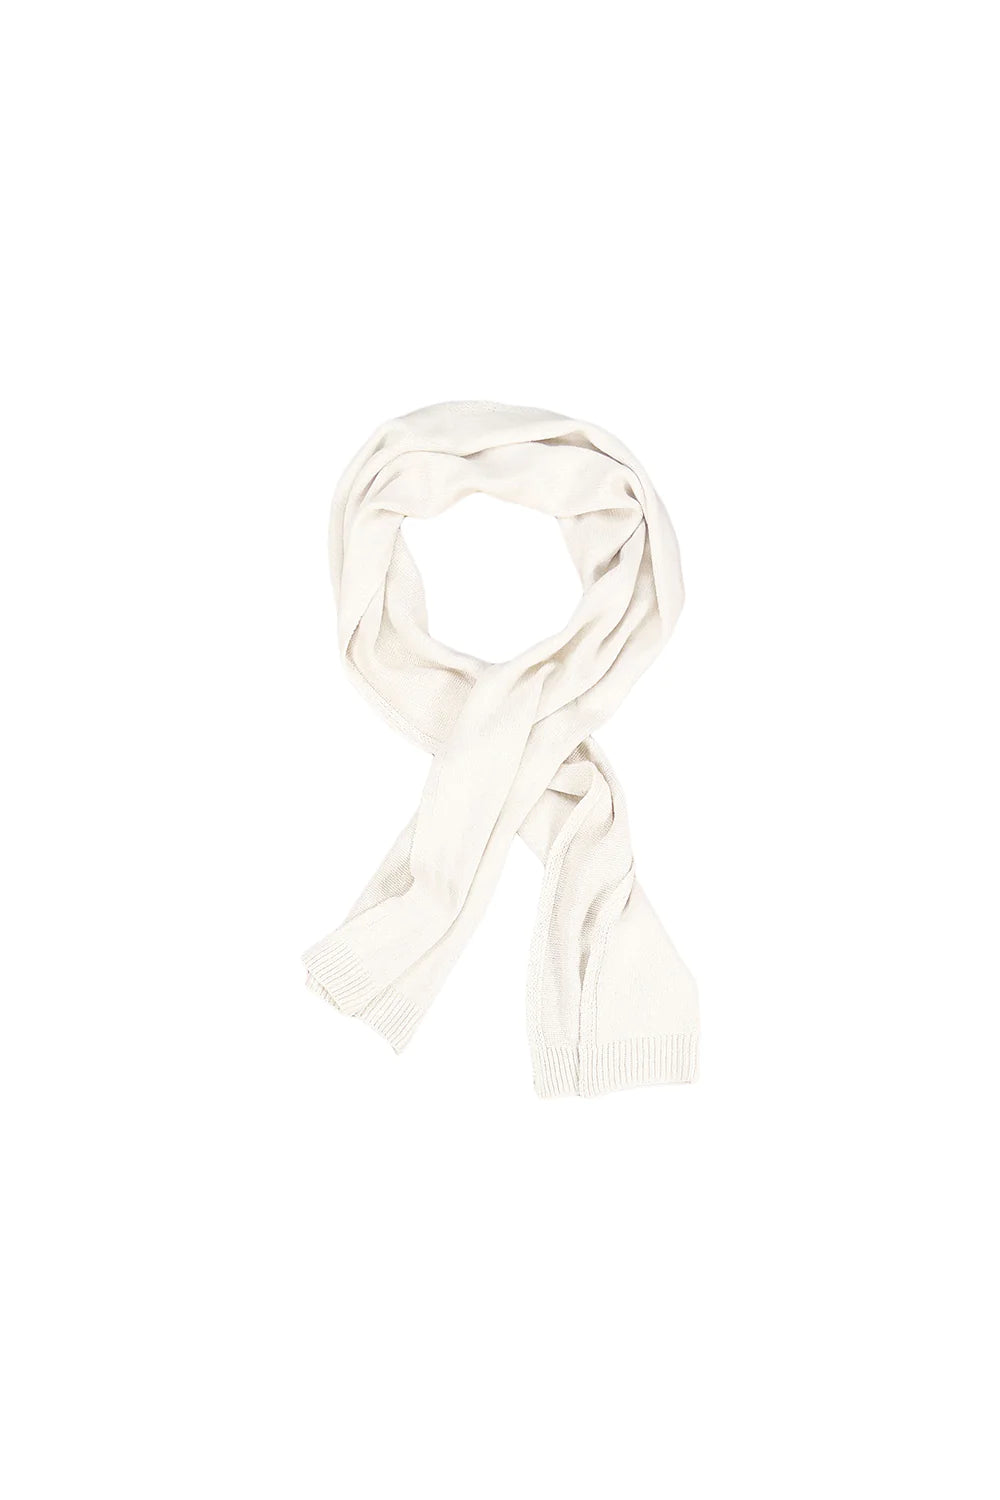 JUNGMAVEN Sustainable Hemp Accessories - Classic Knit Unisex Scarf - Hemp Merino Wool Eco-Blend - Natural White